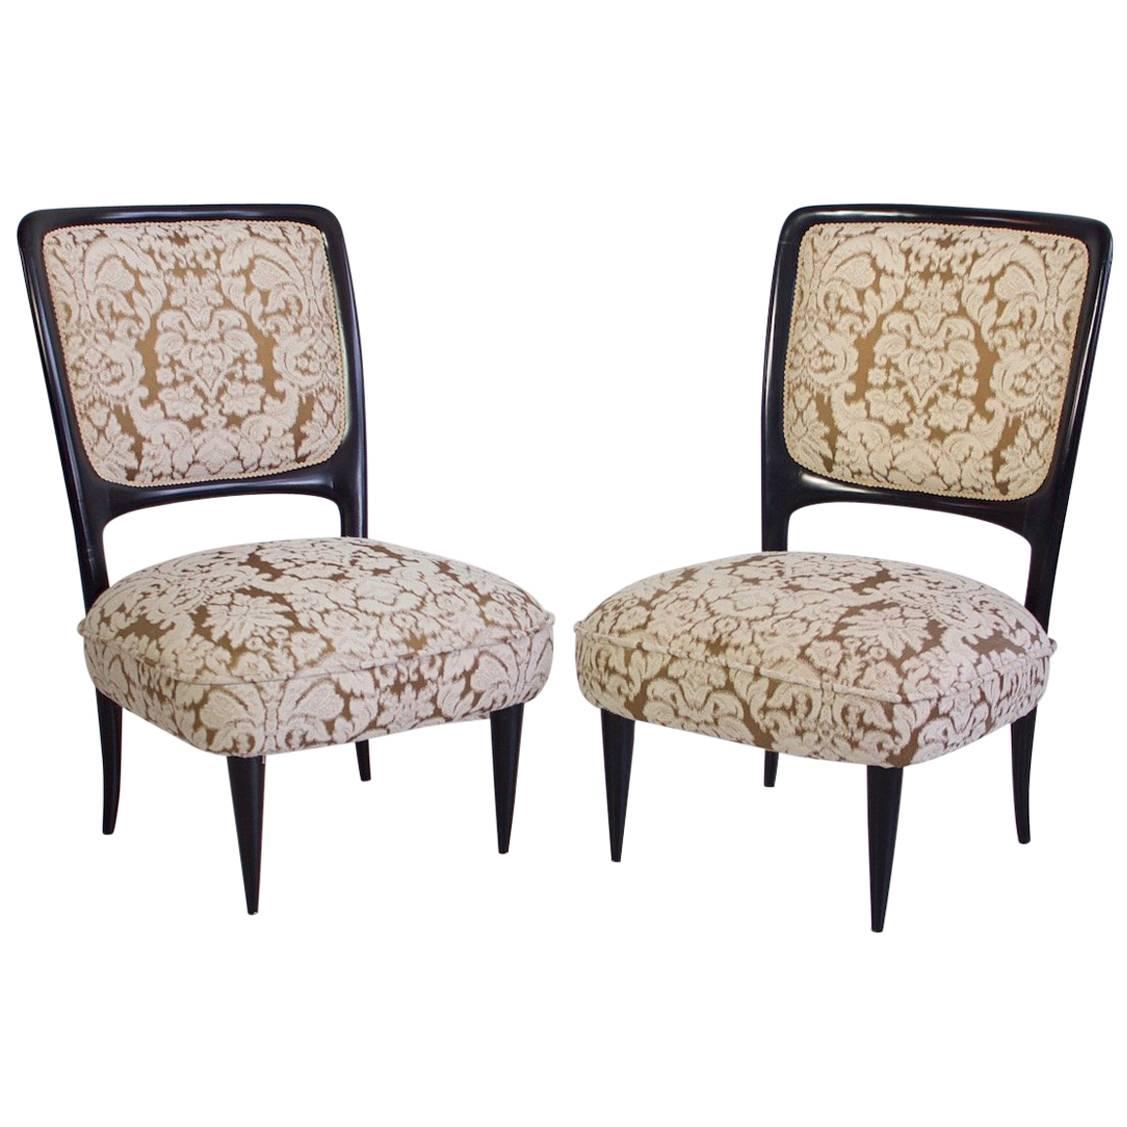 Pair of Handmade Italian Mahogany Chairs with Low Seat